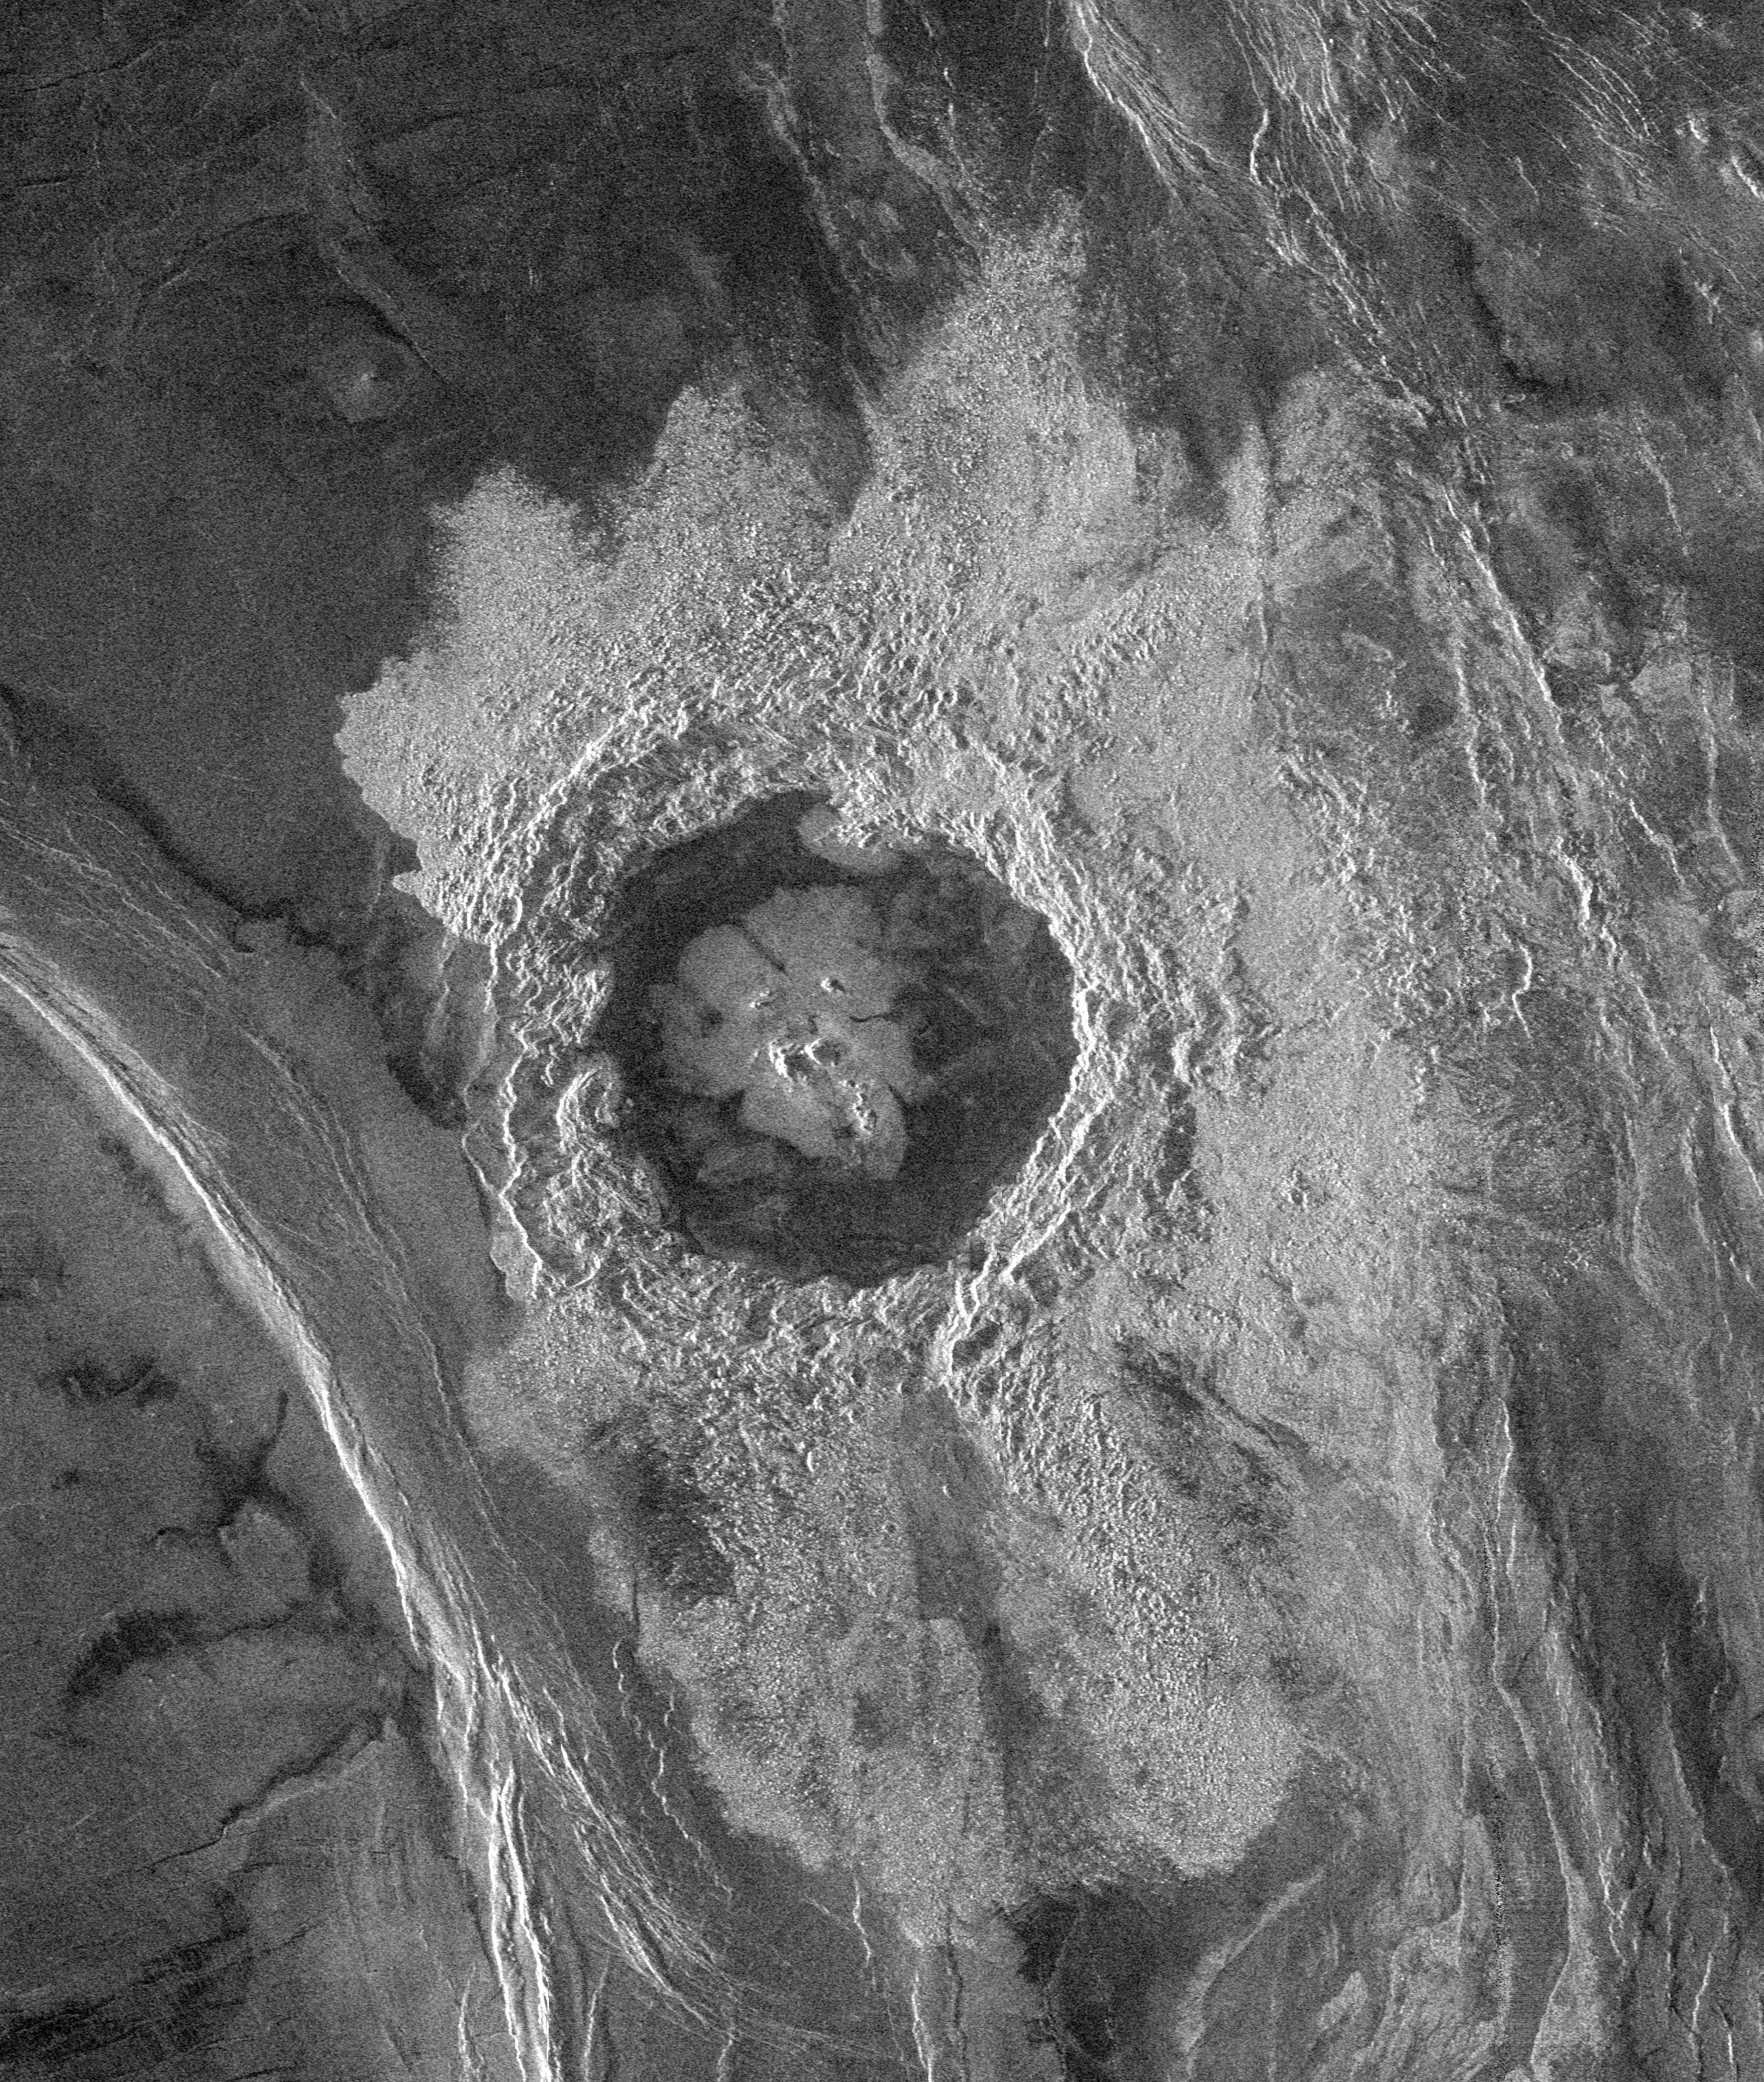 Dickinson Crater on Venus